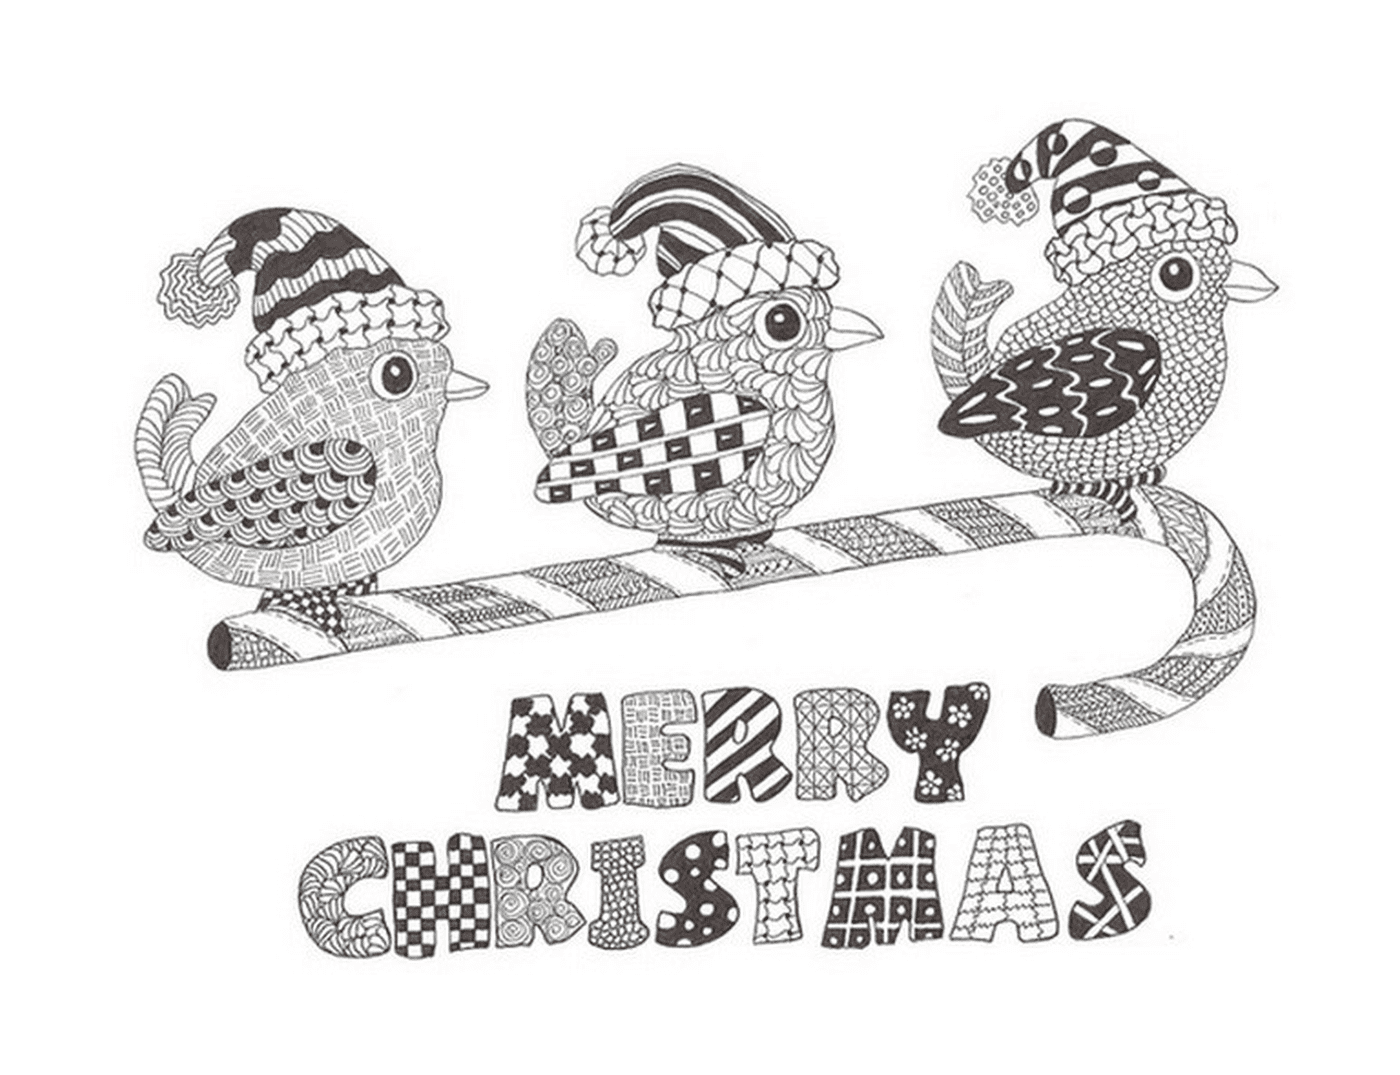  Merry Christmas - Three birds on a Christmas tree 